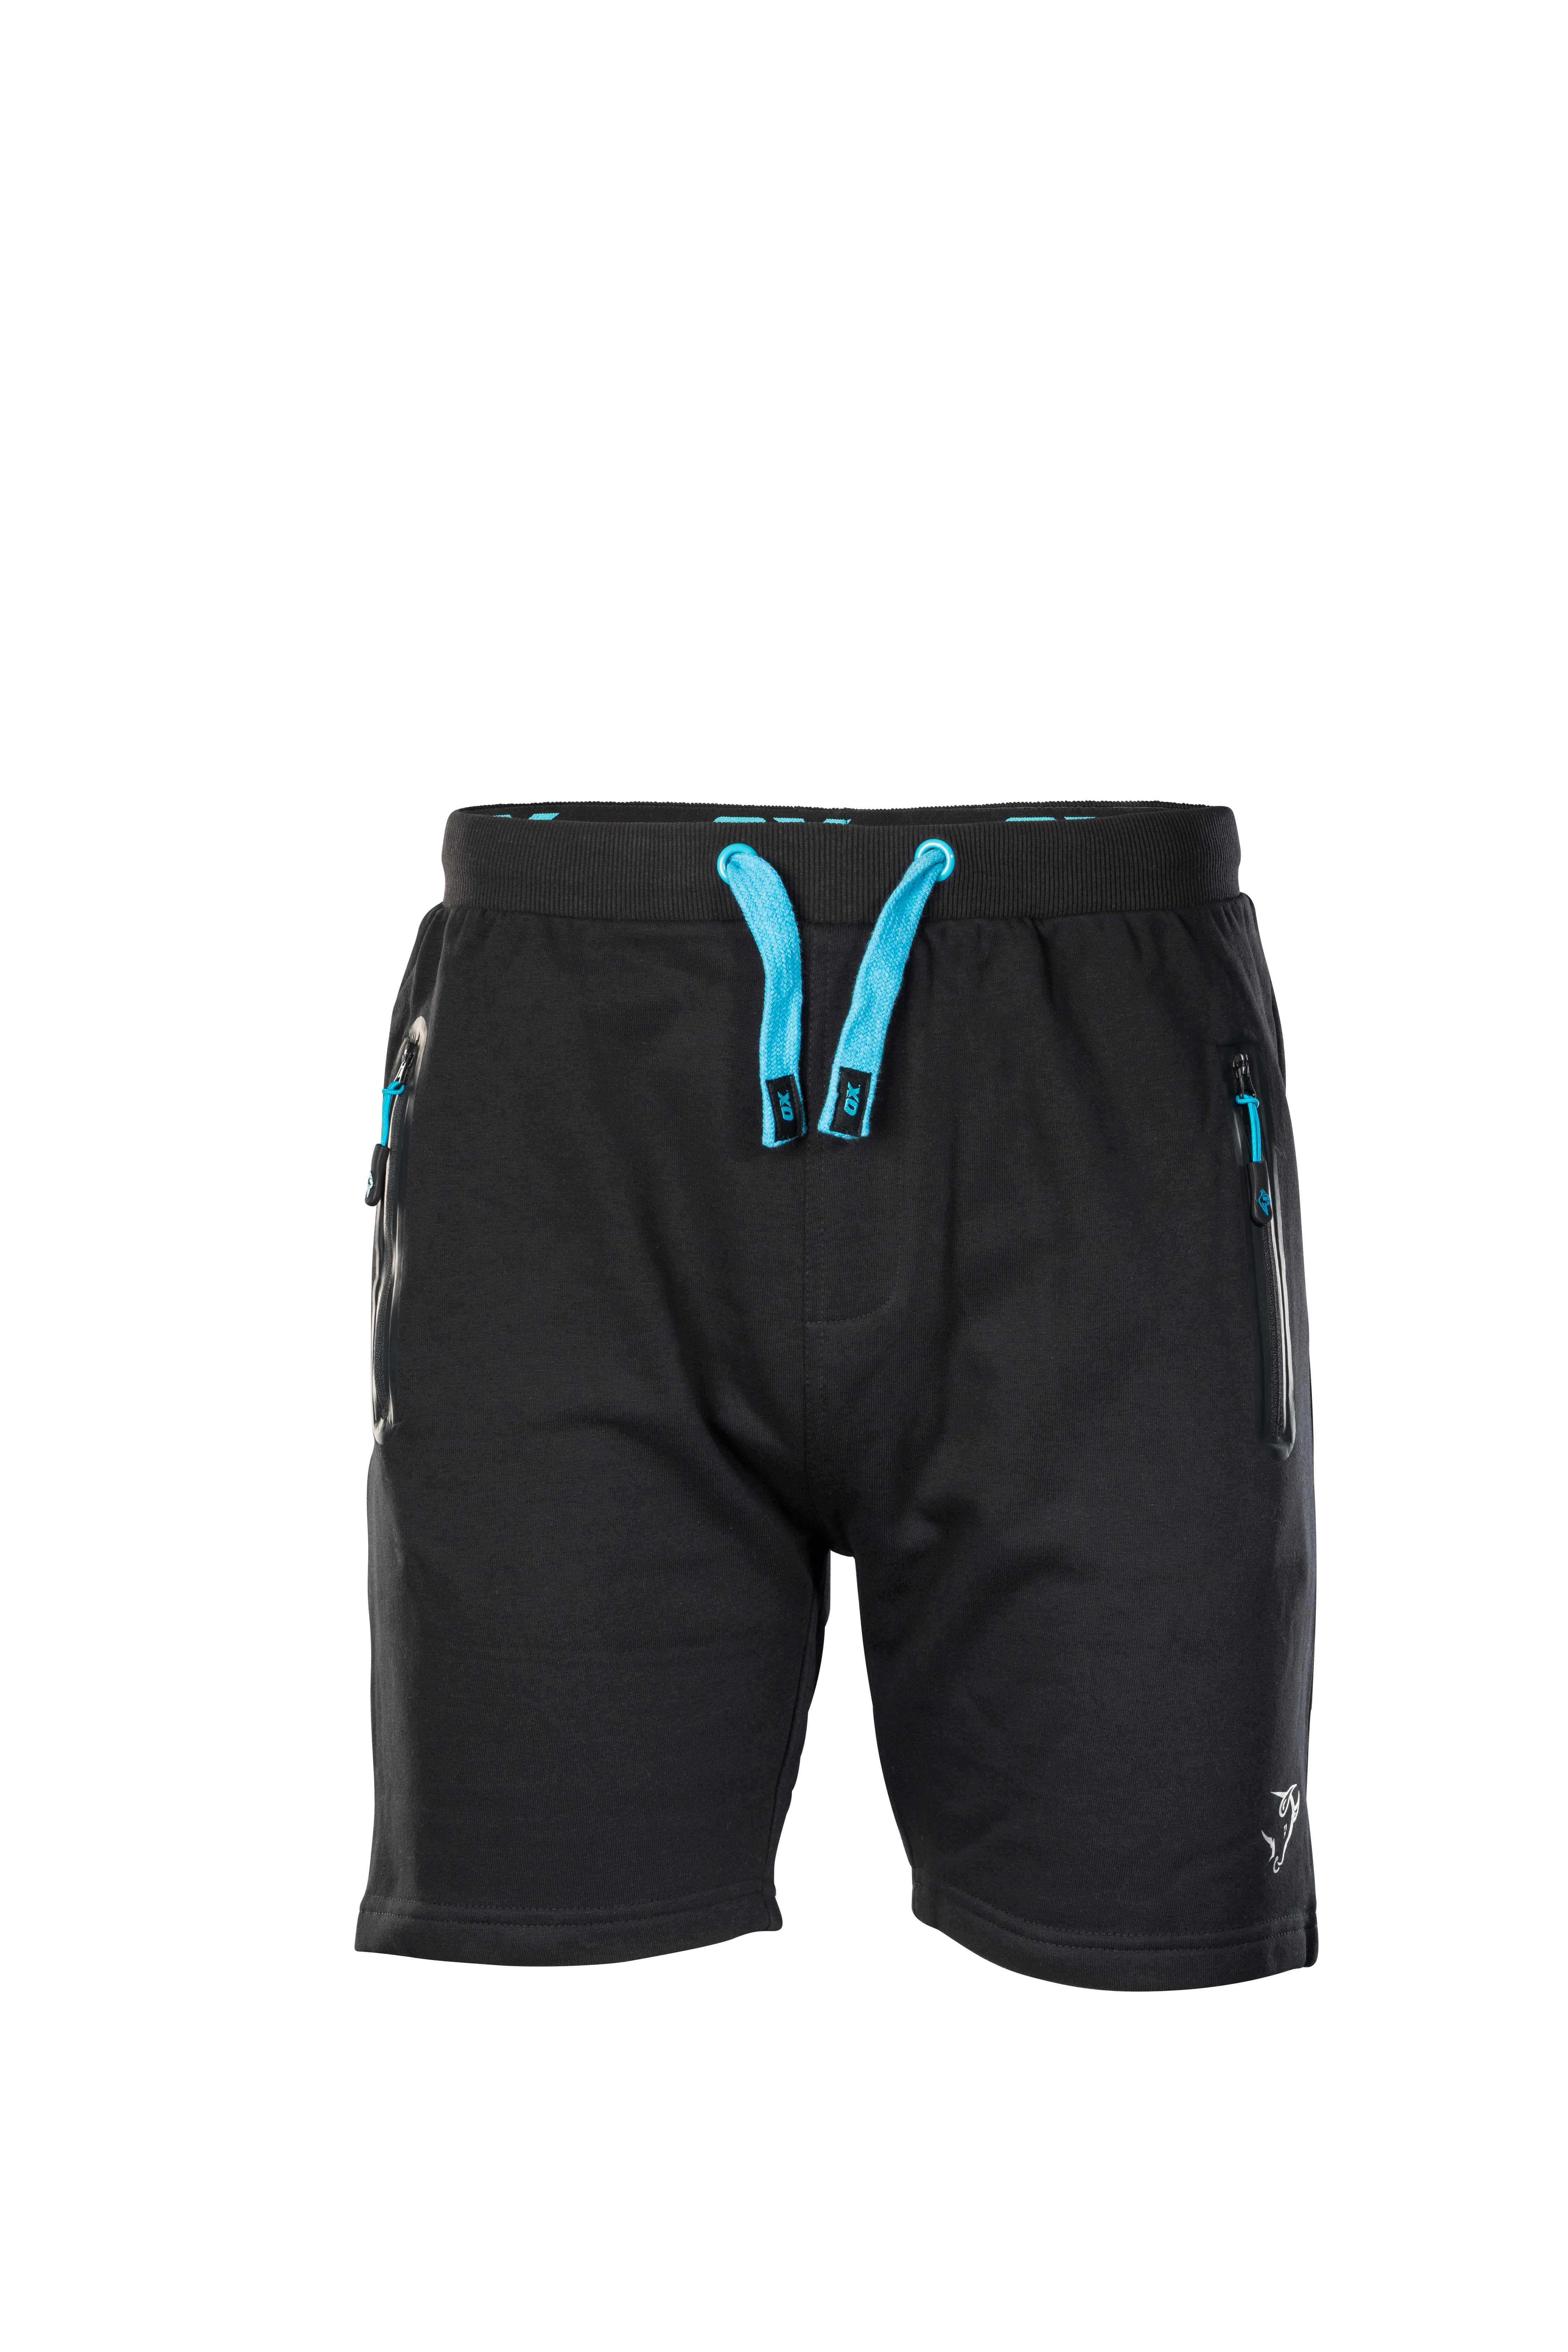 OX Jogger Shorts - Black - 38